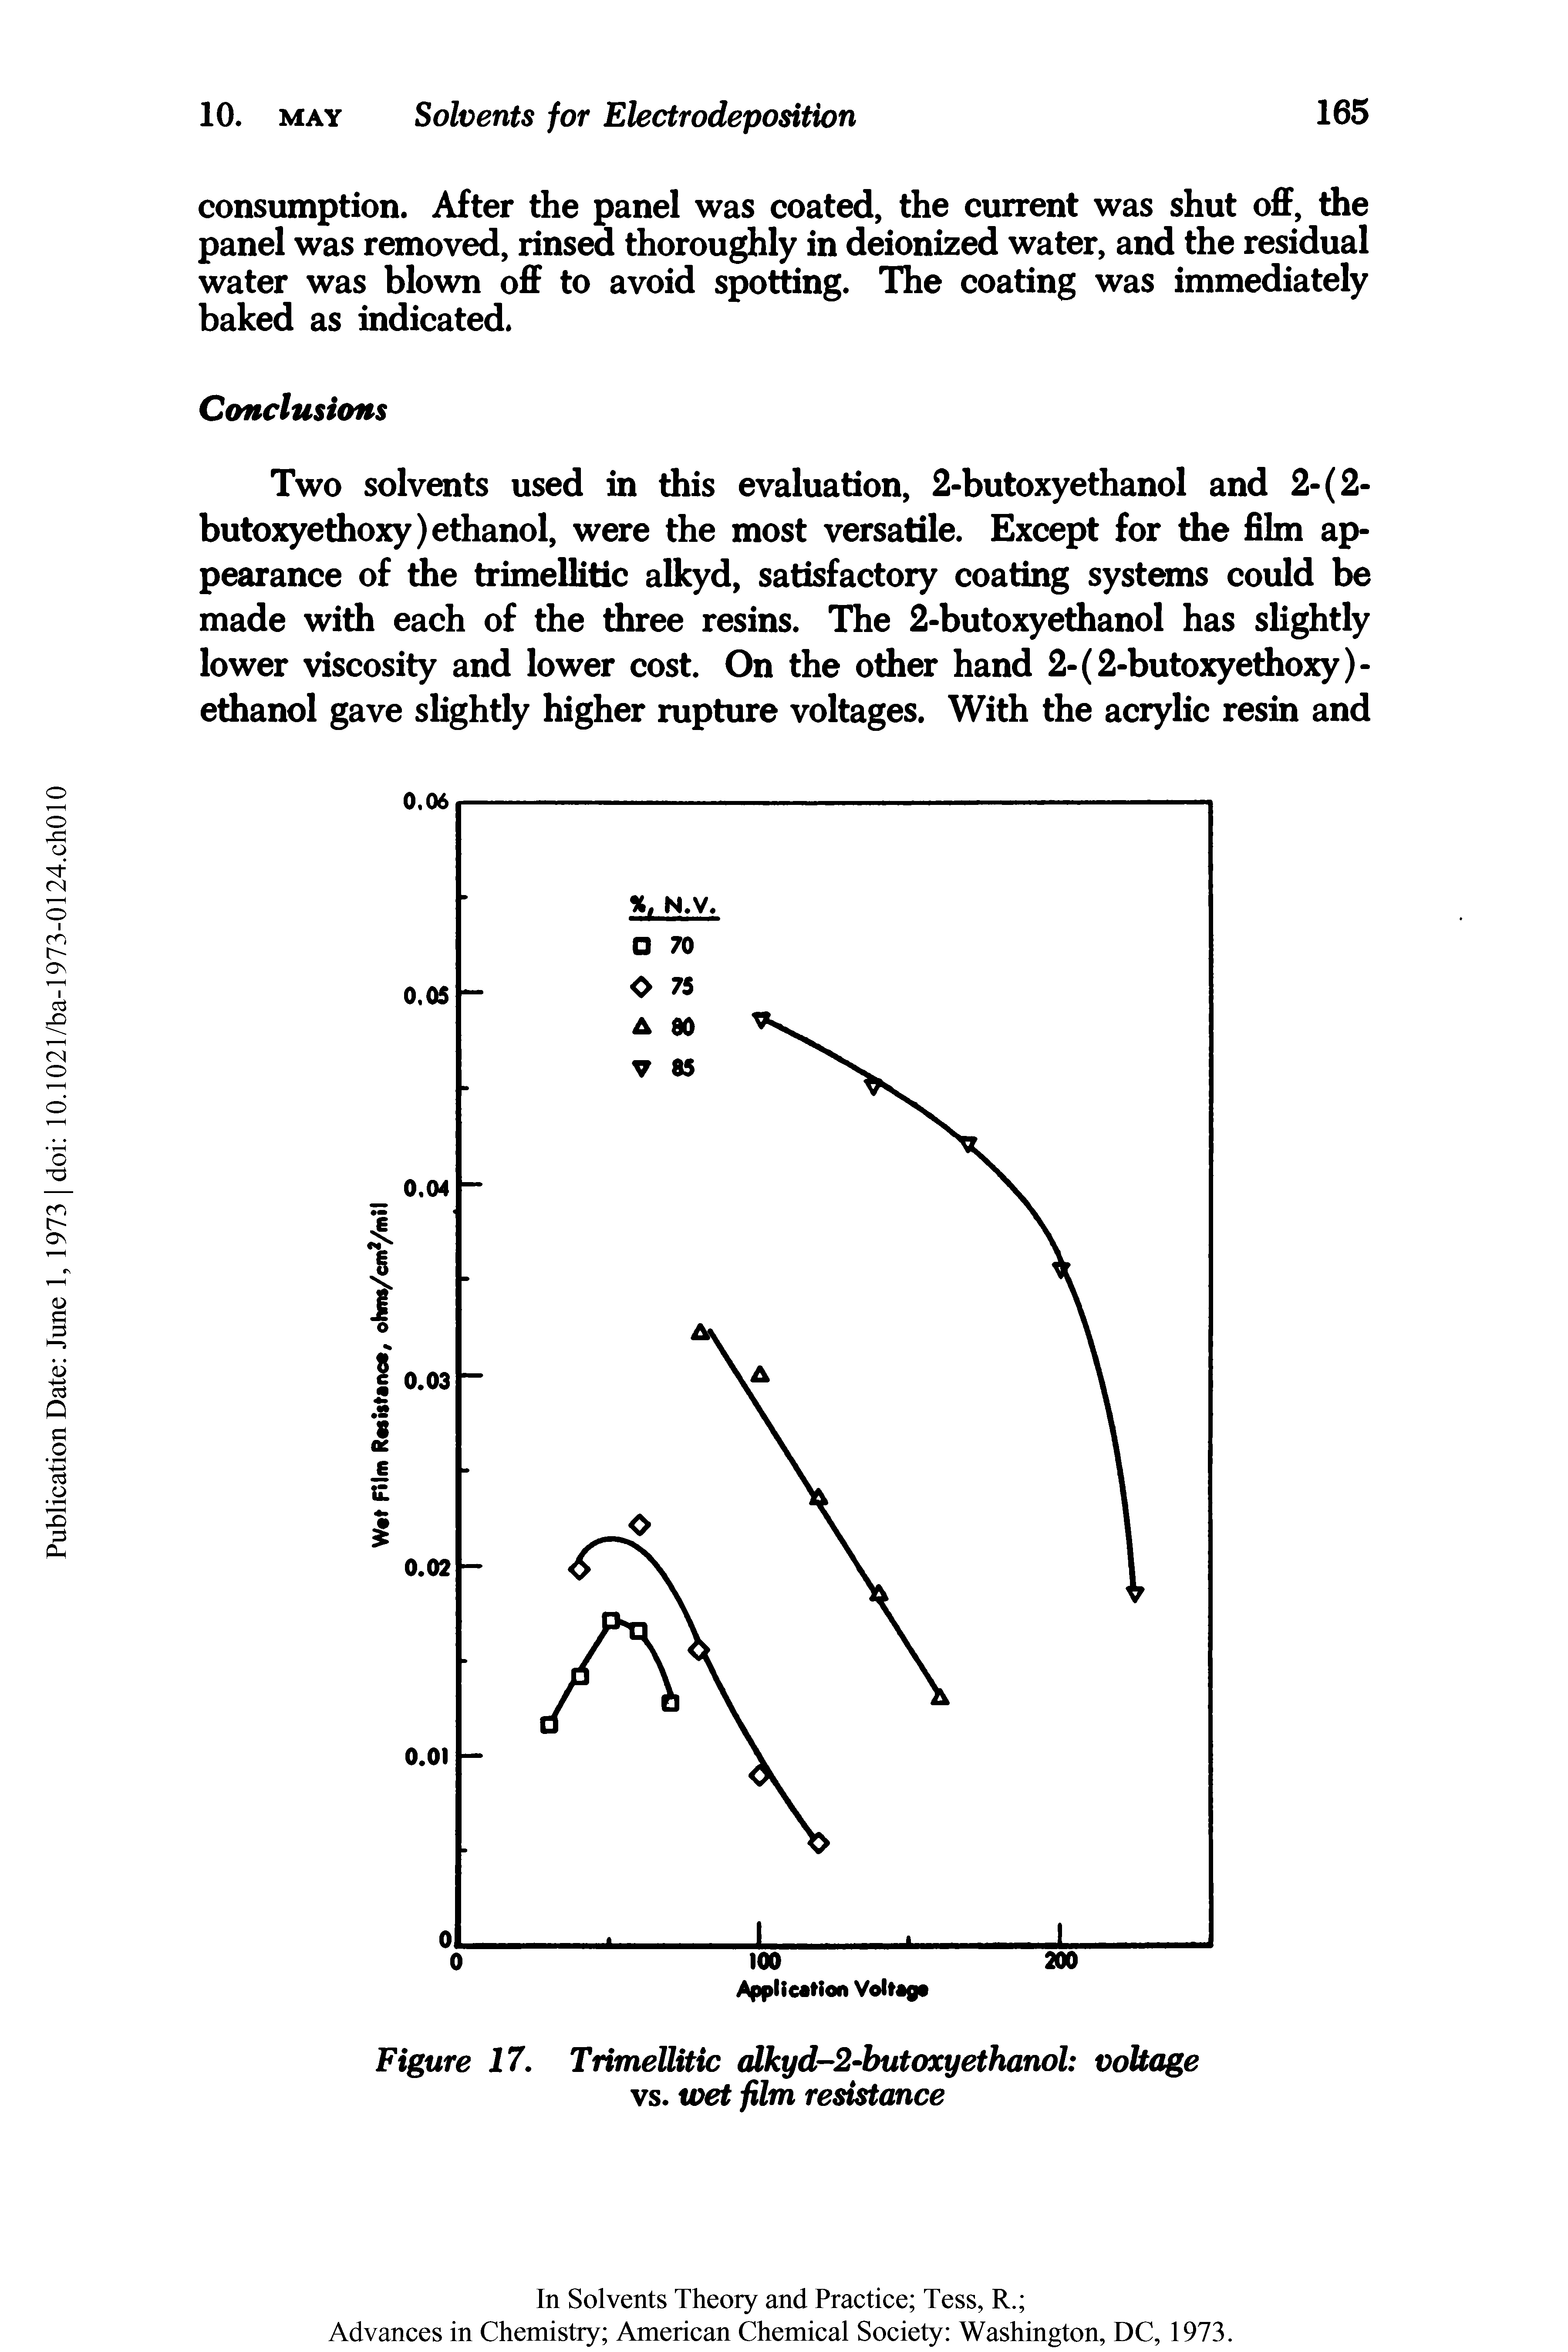 Figure 17. Trimellitic alkyd-2-butoxyethanol voltage vs. wet film resistance...